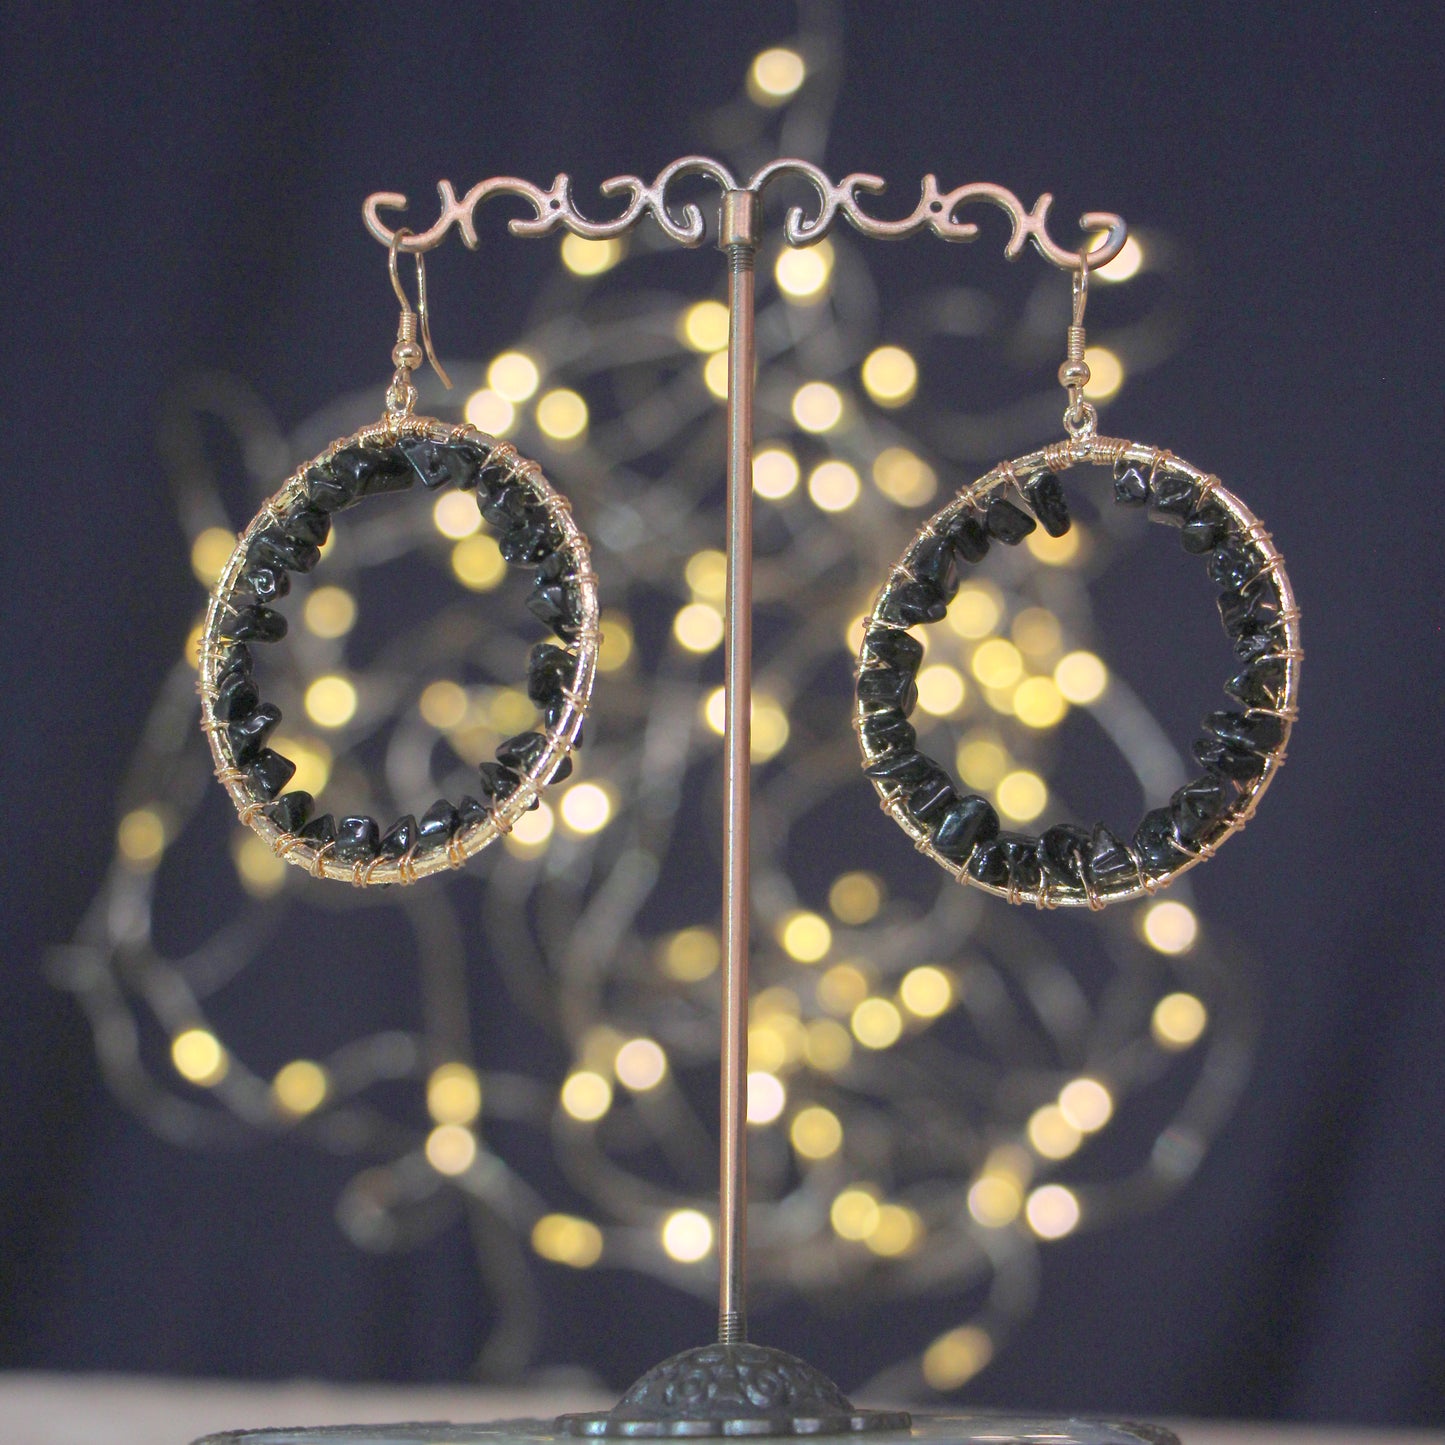 Blueberry black beads detailing circular shape drop earring